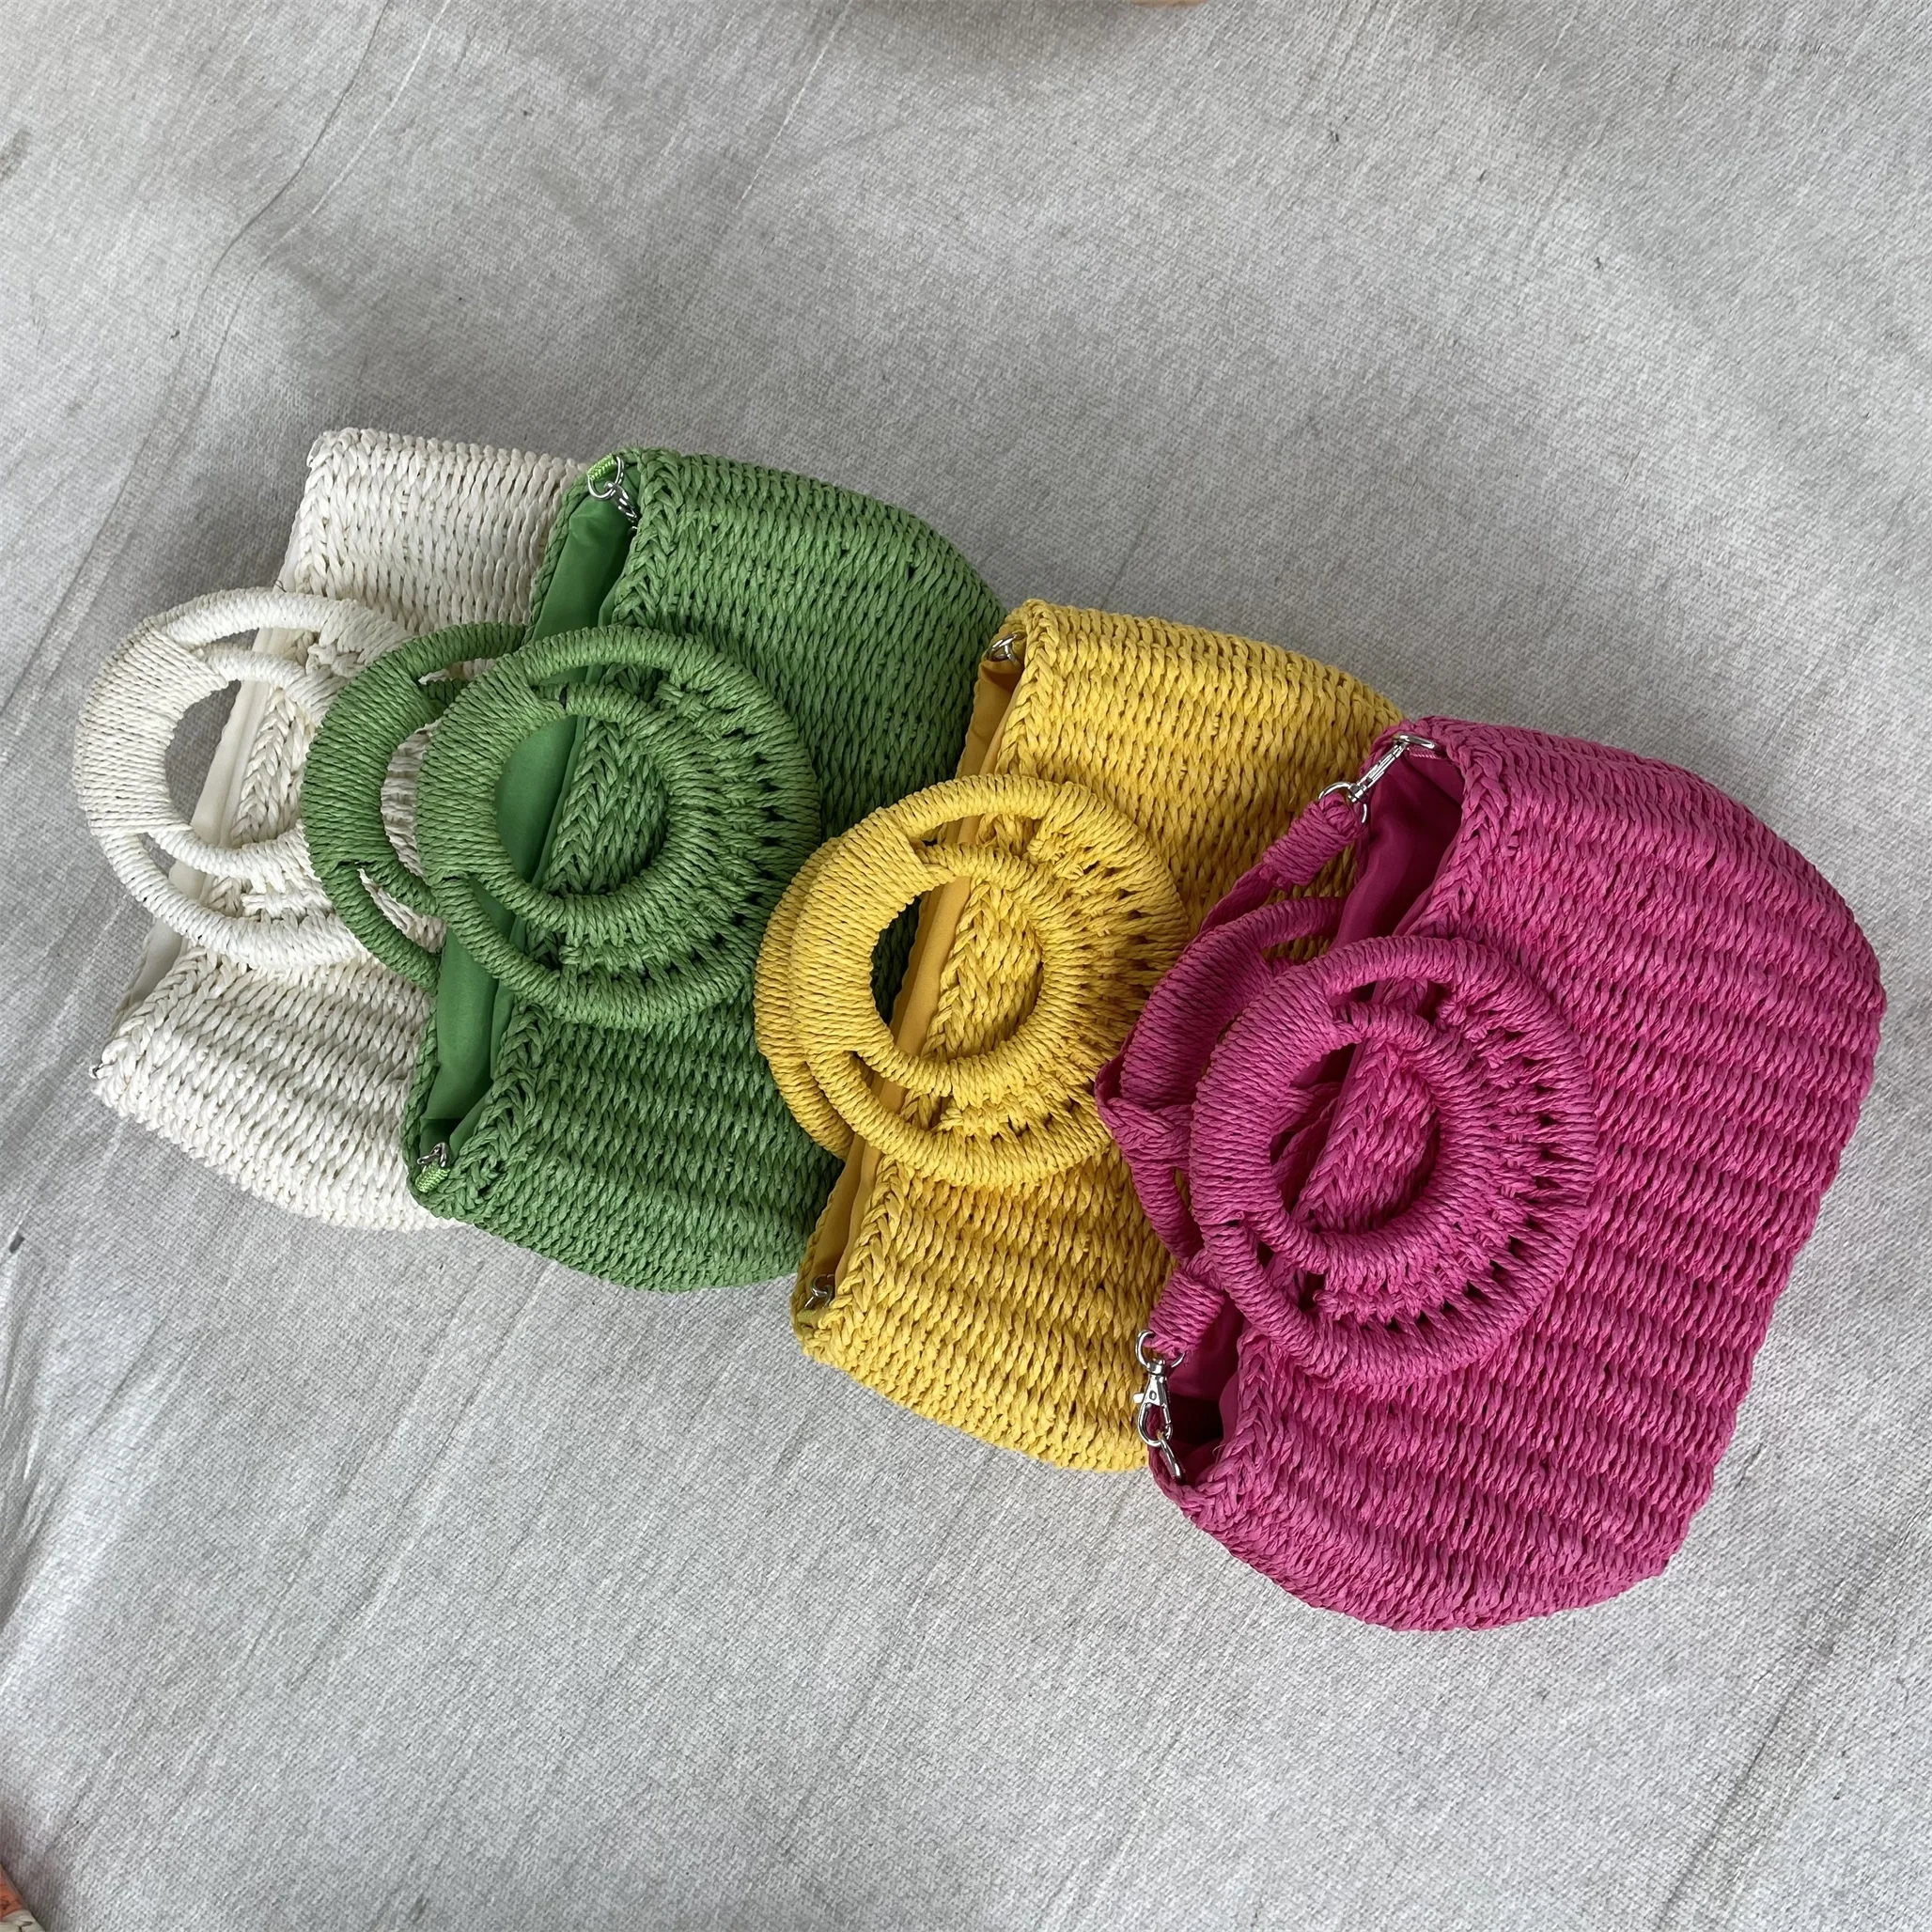 New Design straw beach bag Ladies Fashion Handbags Women Woven Shoulder  crochet Bag Straw Handbags